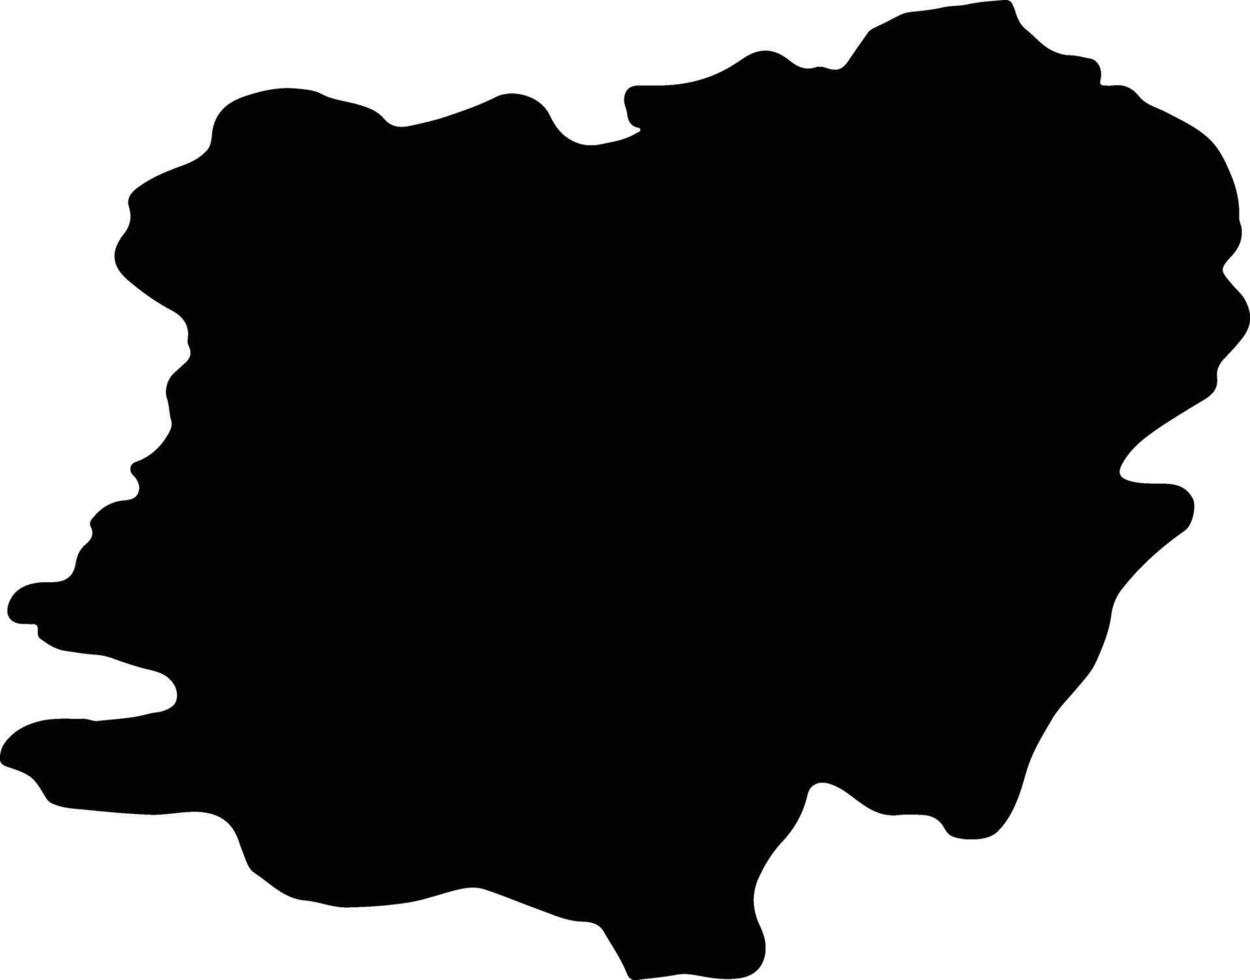 caras-severin Roemenië silhouet kaart vector